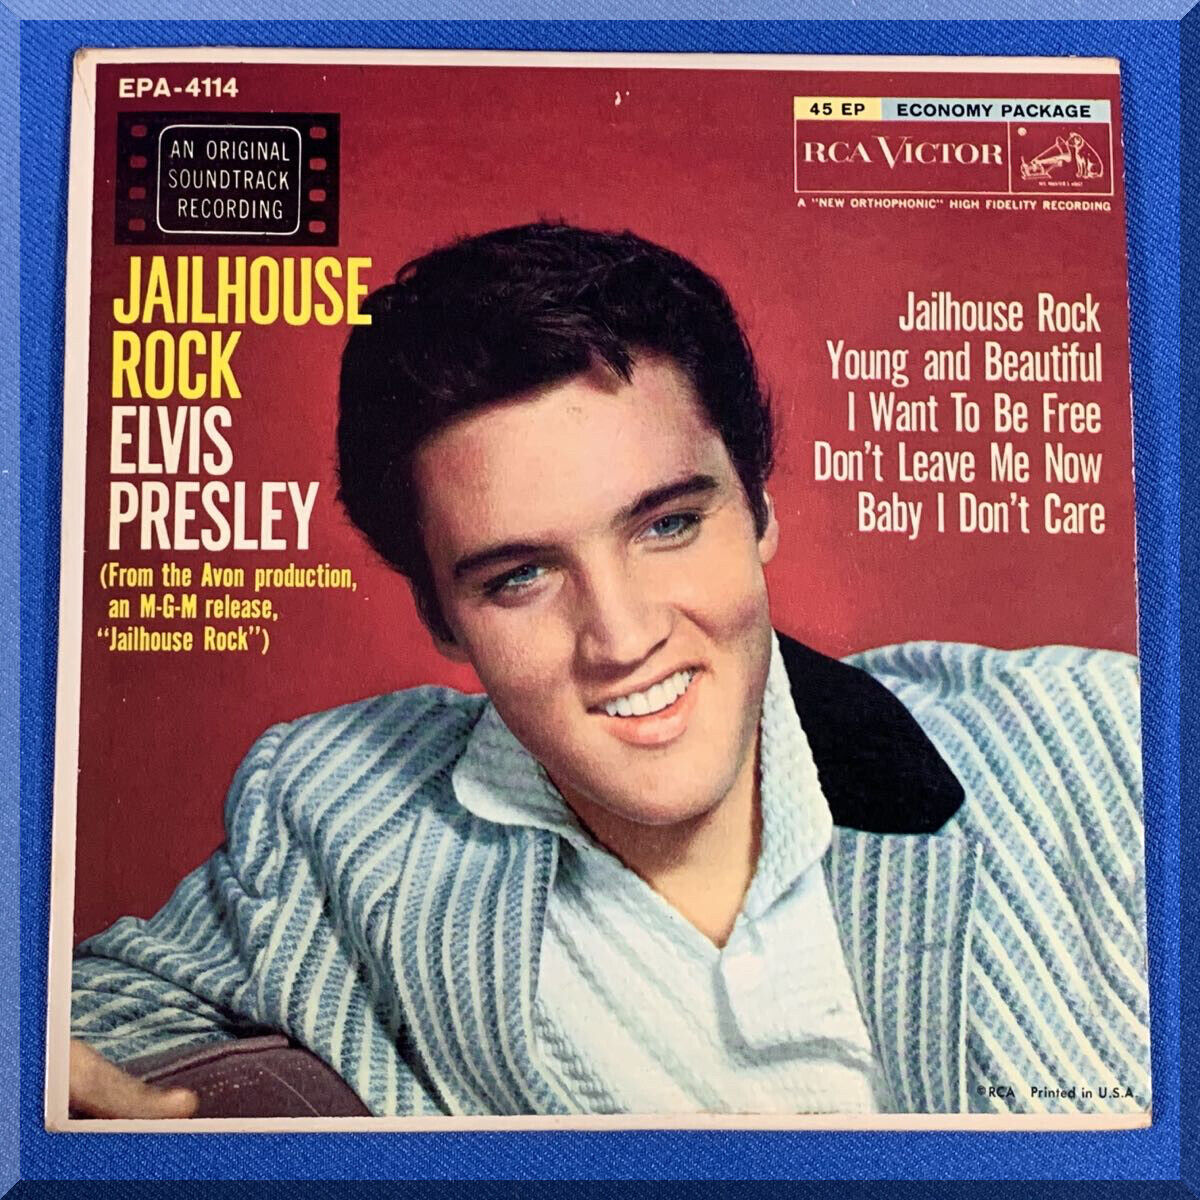 ELVIS PRESLEY JAILHOUSE ROCK 45 RPM EPA 4114 RCA VICTOR CARDBOARD PICTURE SLEEVE